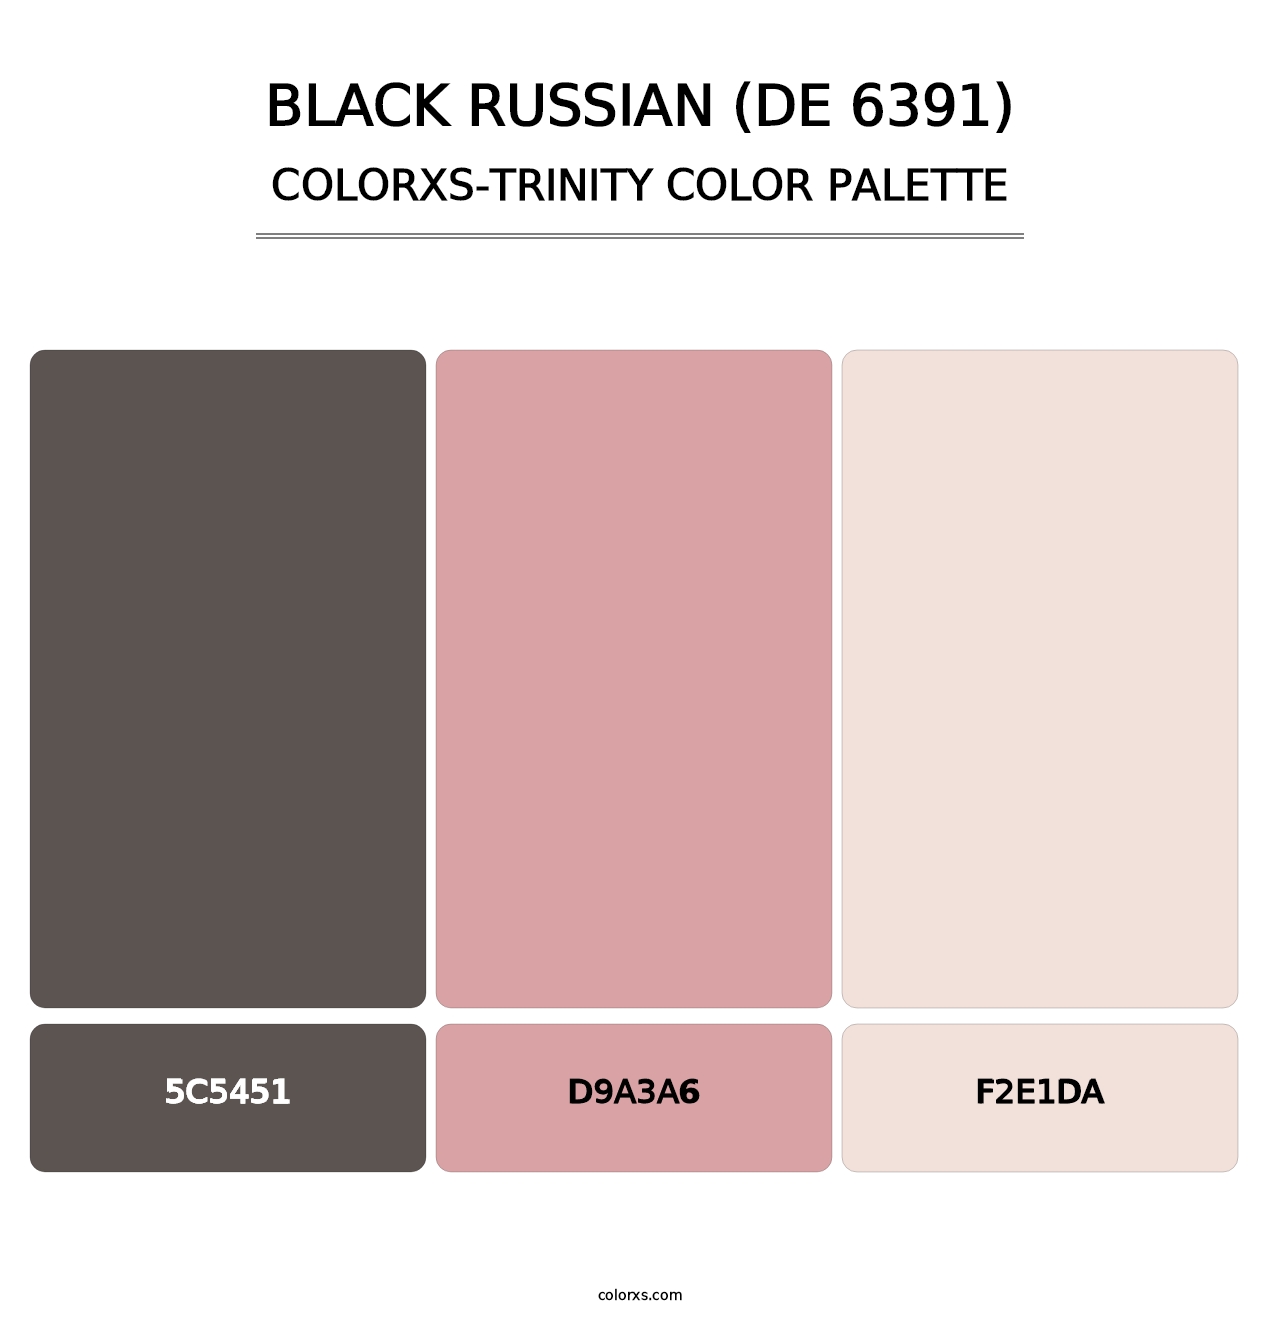 Black Russian (DE 6391) - Colorxs Trinity Palette